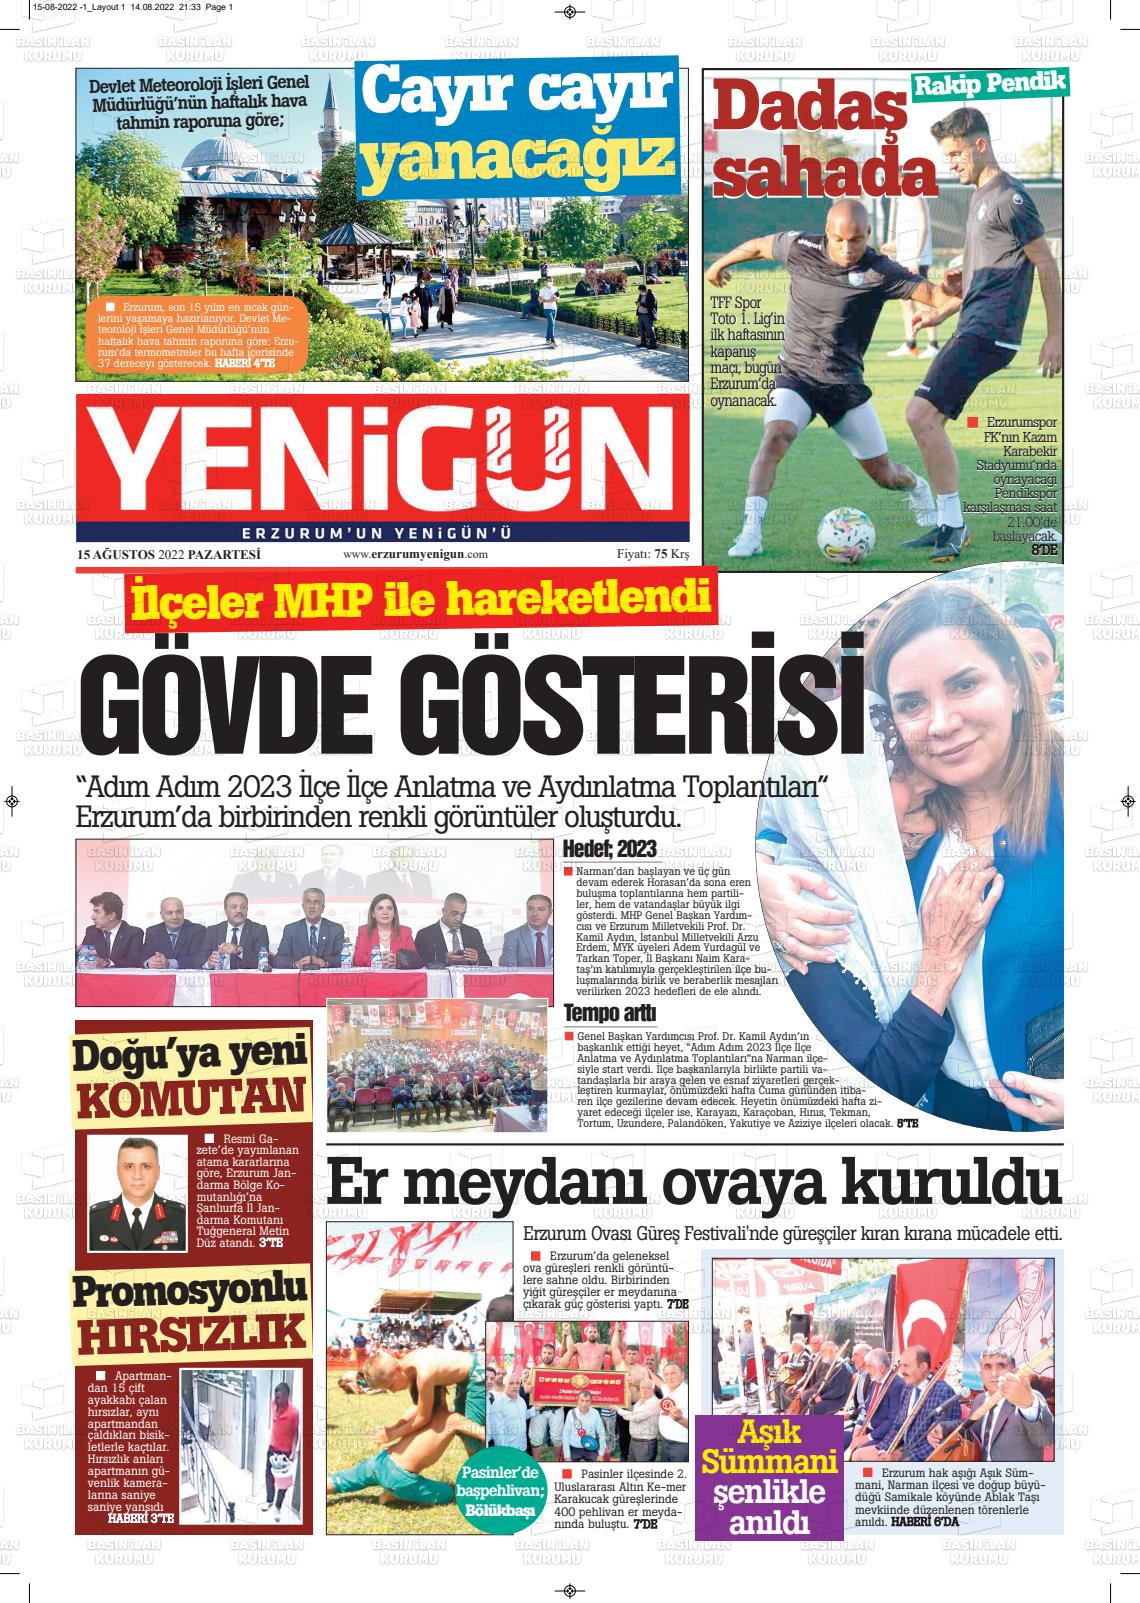 15 Ağustos 2022 Erzurum Yenigün Gazete Manşeti